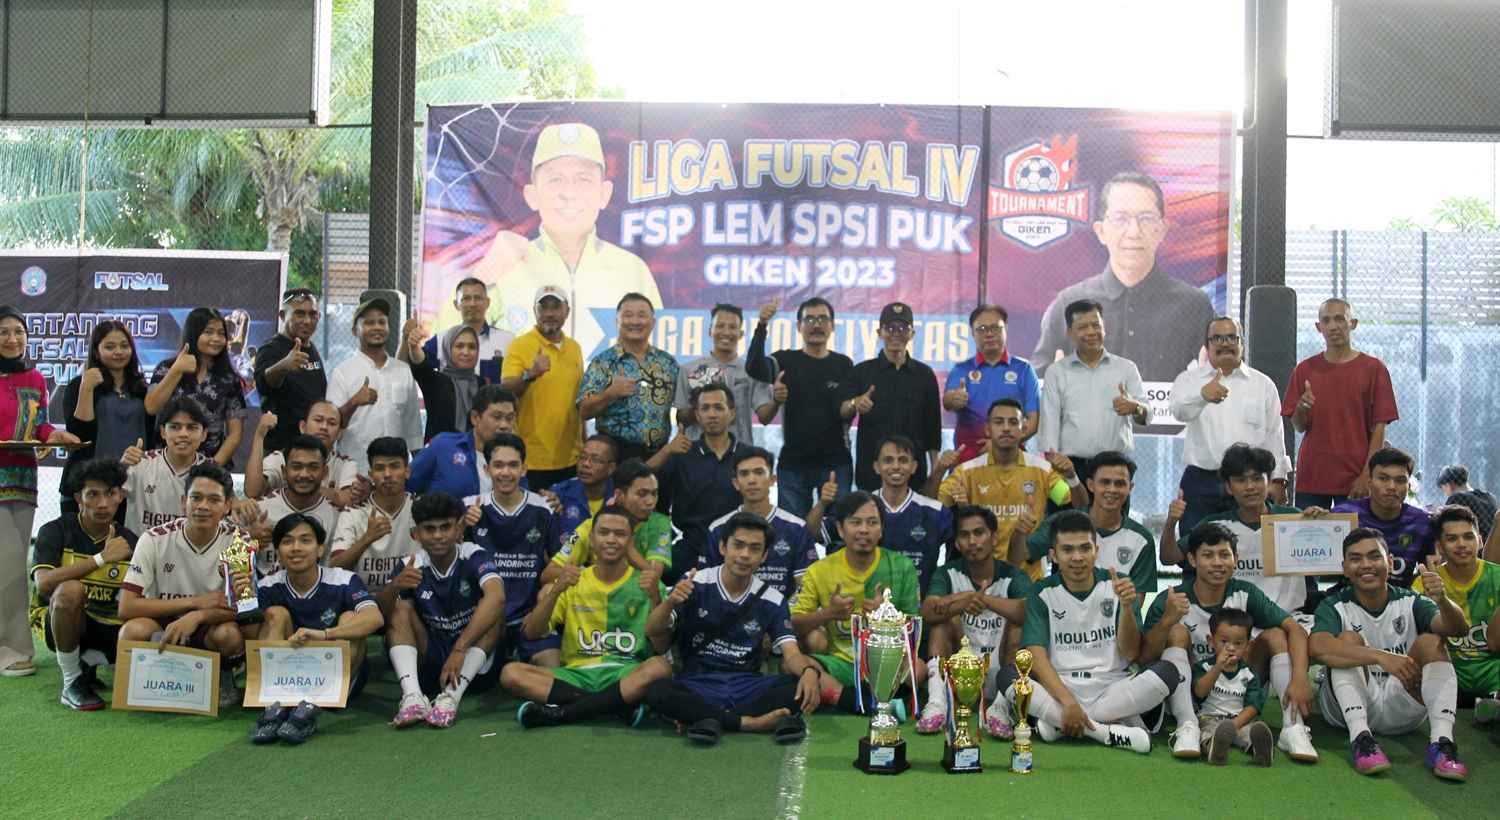 Tutup Liga Futsal IV FSP LEM SPSI PUK Giken 2023: Amsakar Dorong Harmonisasi Demi Prestasi Olahraga